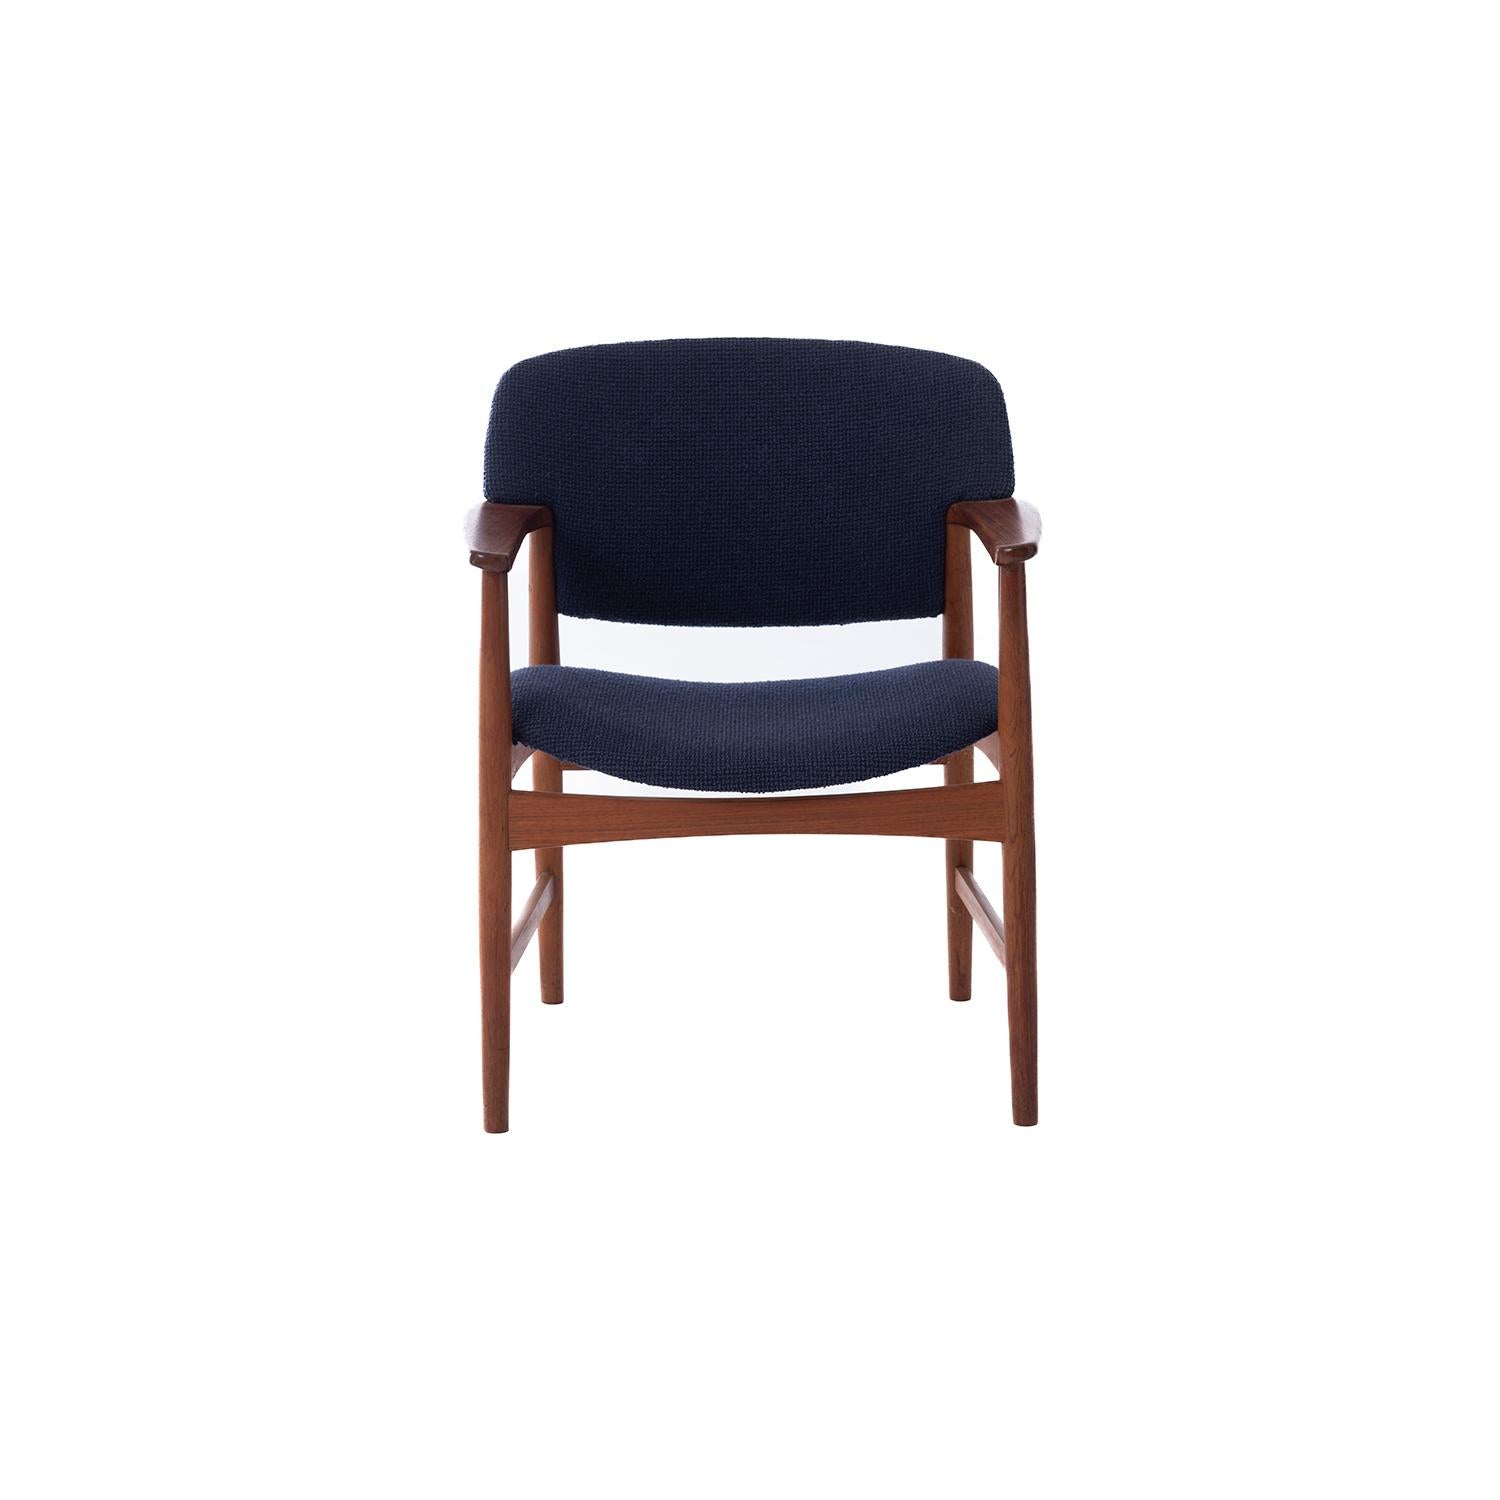 Danish modern teak and wool armchair designed by Ejnar Larsen & Aksel Bender Madsen. See separate listing for matching upholstered footstool.